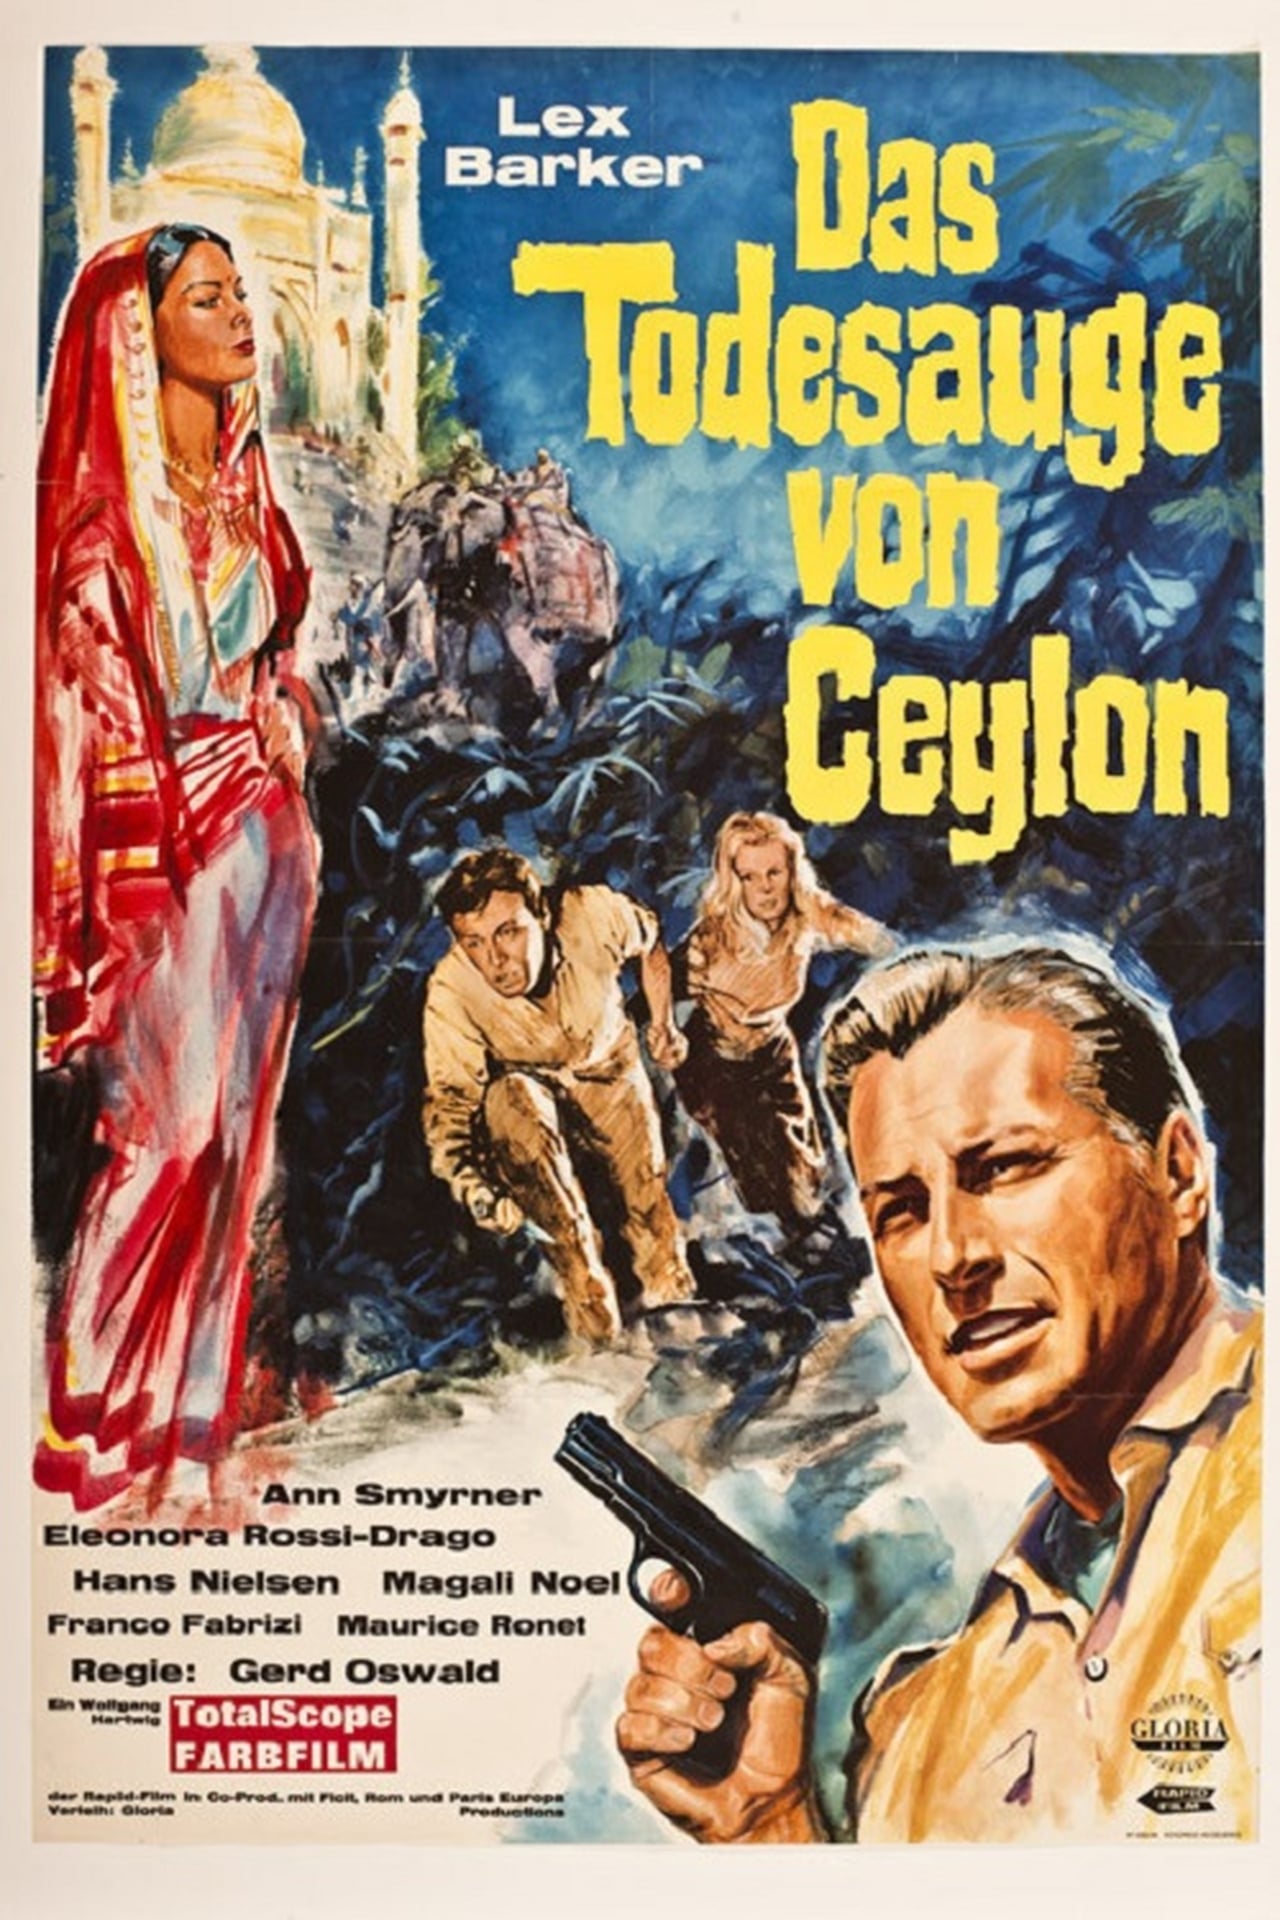 The Death Eye of Ceylon (1963) Screenshot 3 